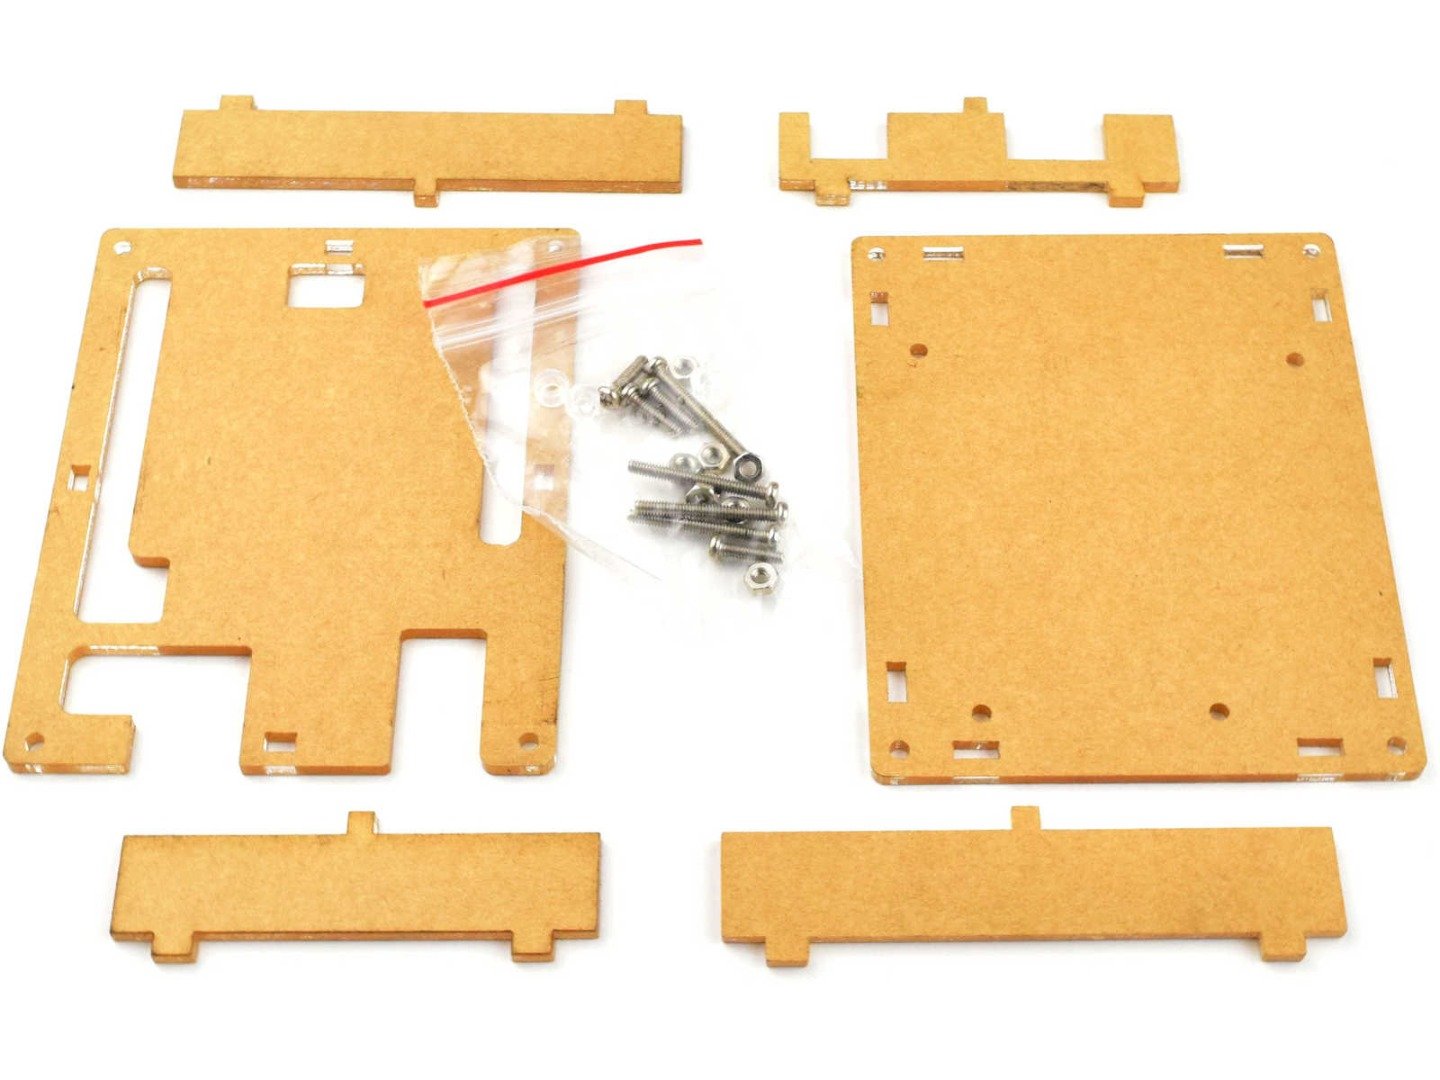 Crystal Clear Acrylic Enclosure Box – Compatible with Arduino UNO 6